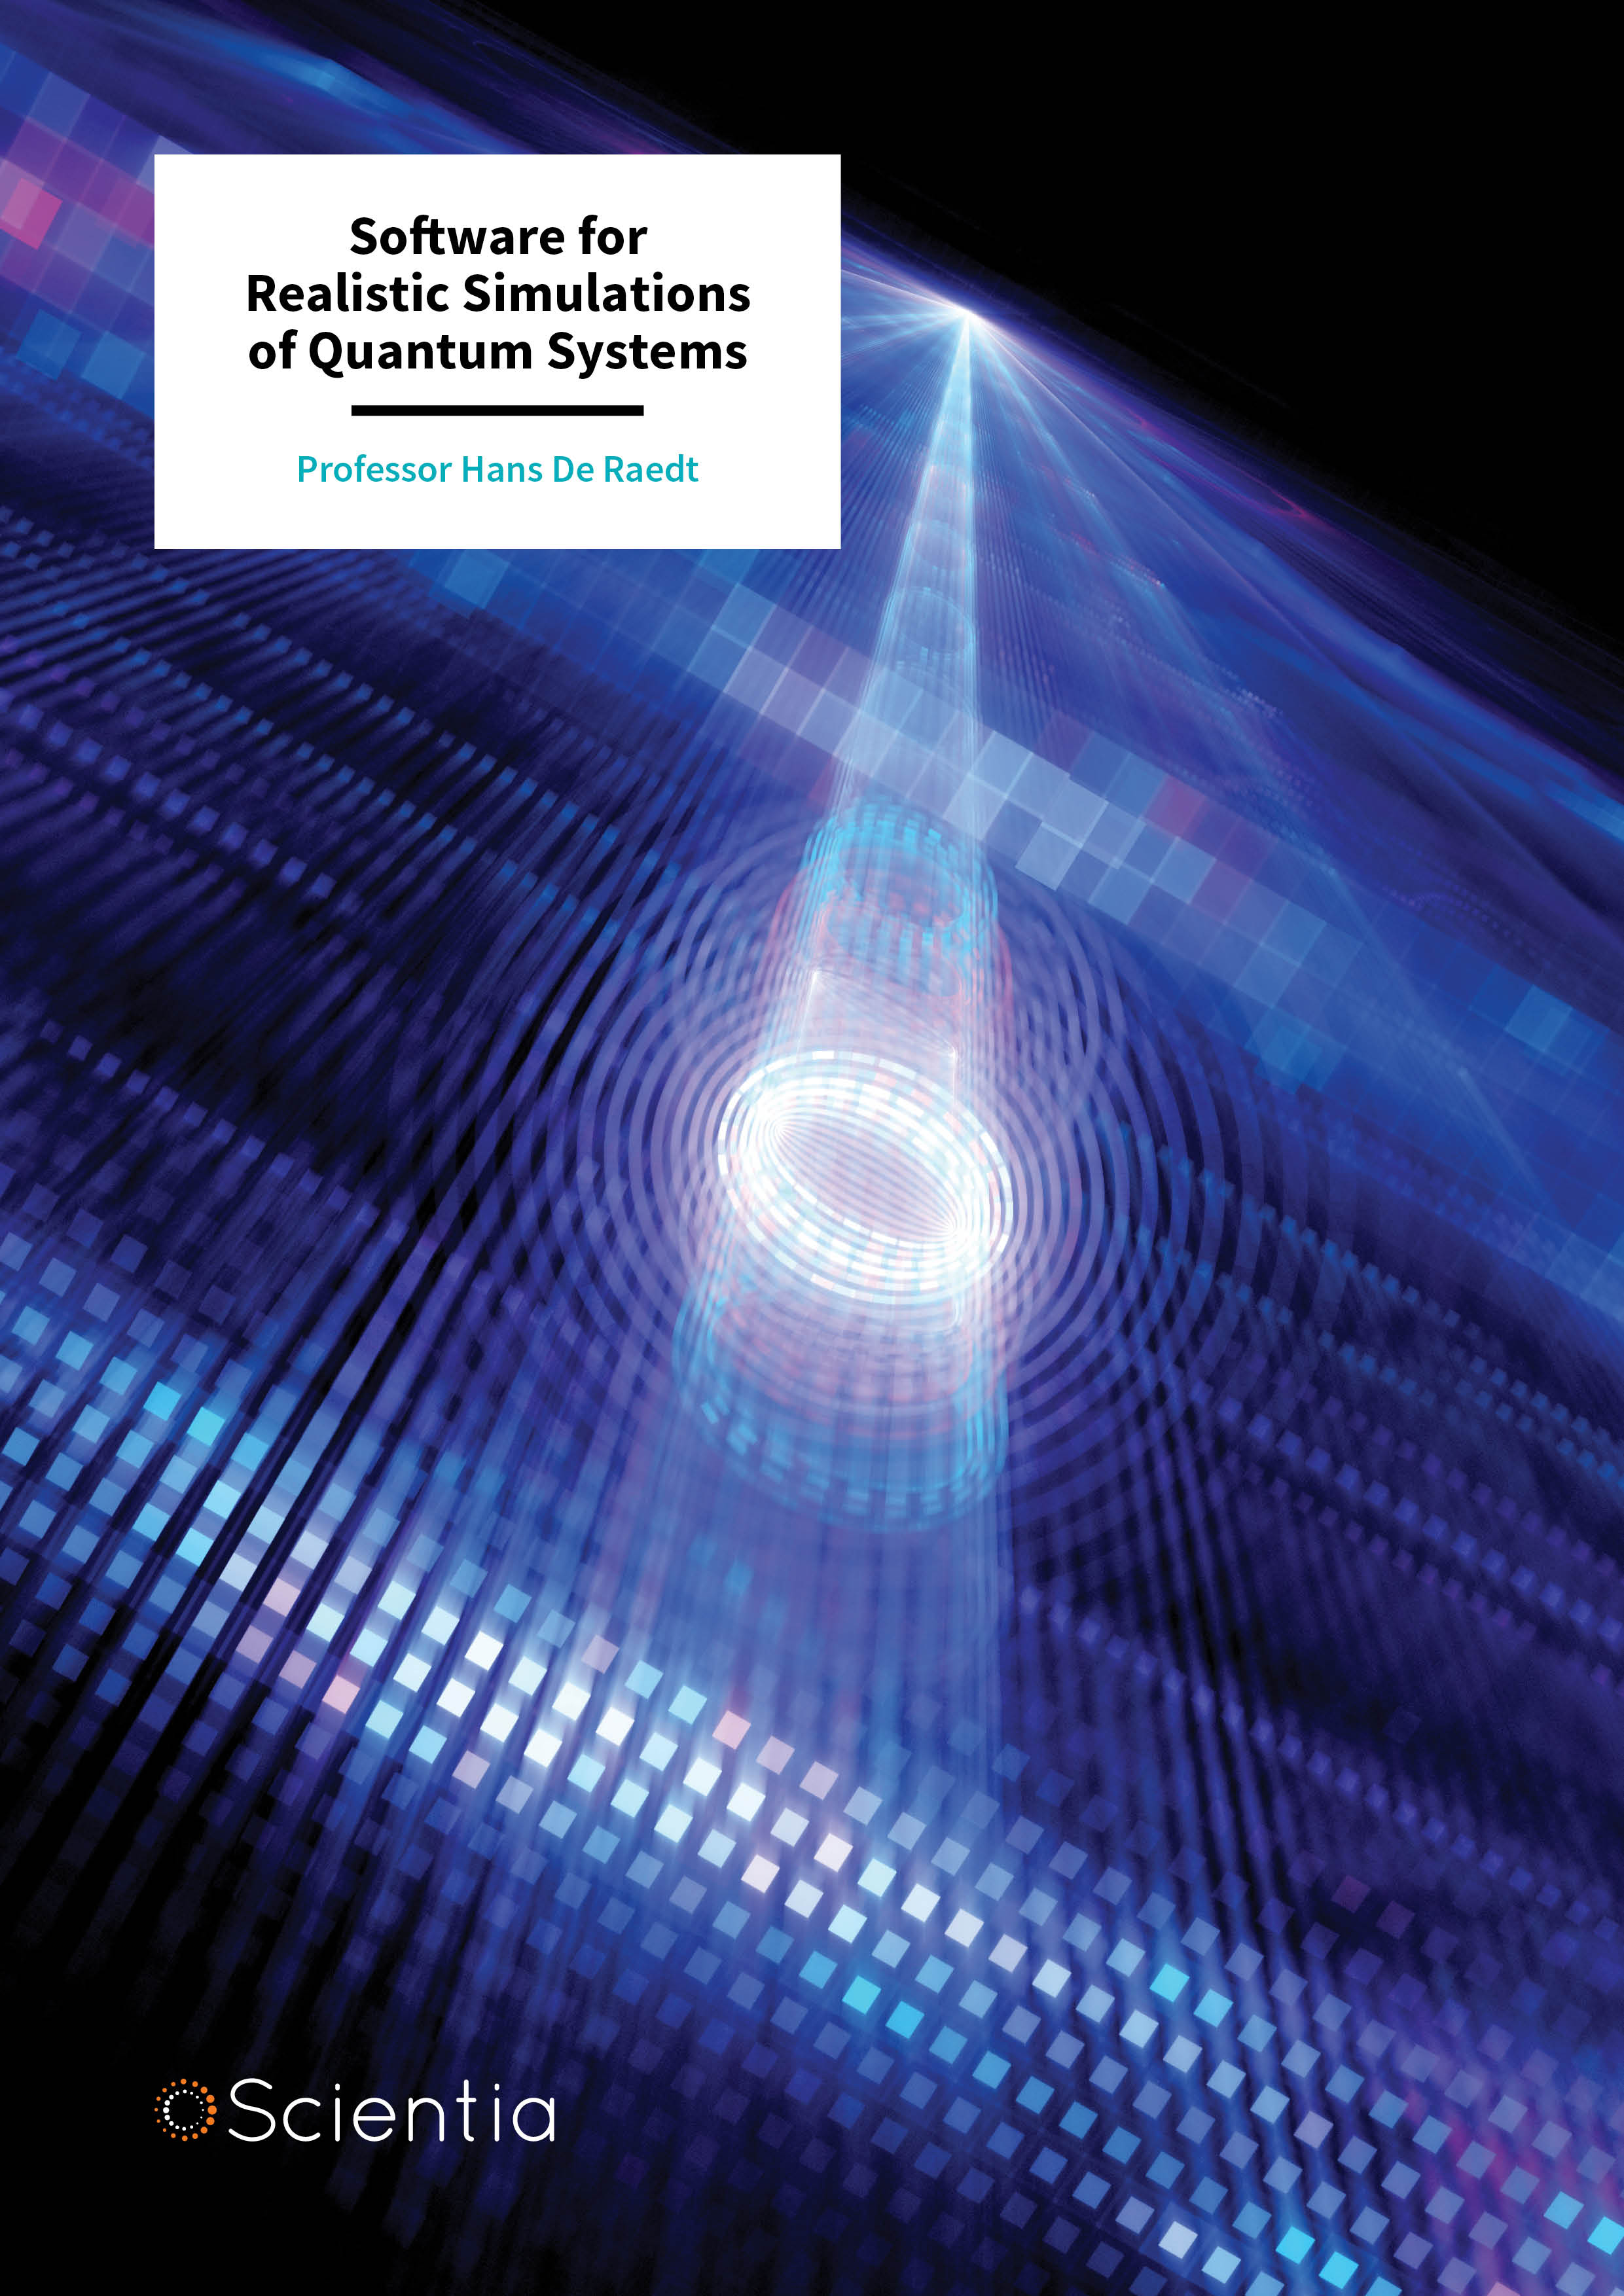 Professor Hans De Raedt – Software for Realistic Simulations of Quantum Systems